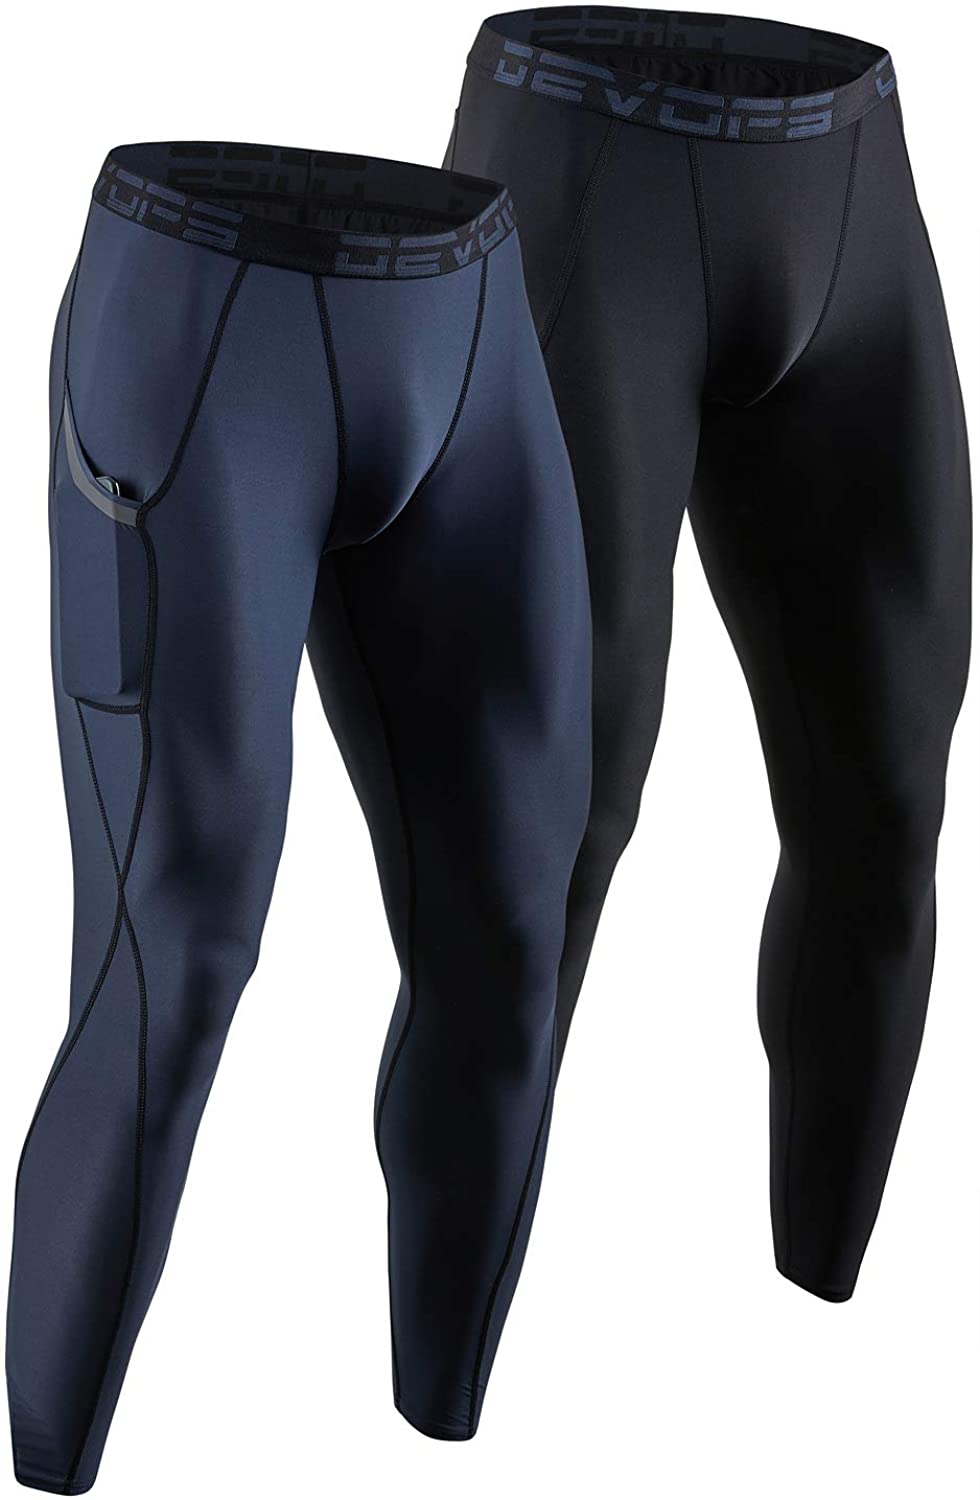 https://www.overshopping.pk/images/uploads/devops-2-pack-men-s-compression-pants-athletic-leggings-withIcZPObULACUL.jpg